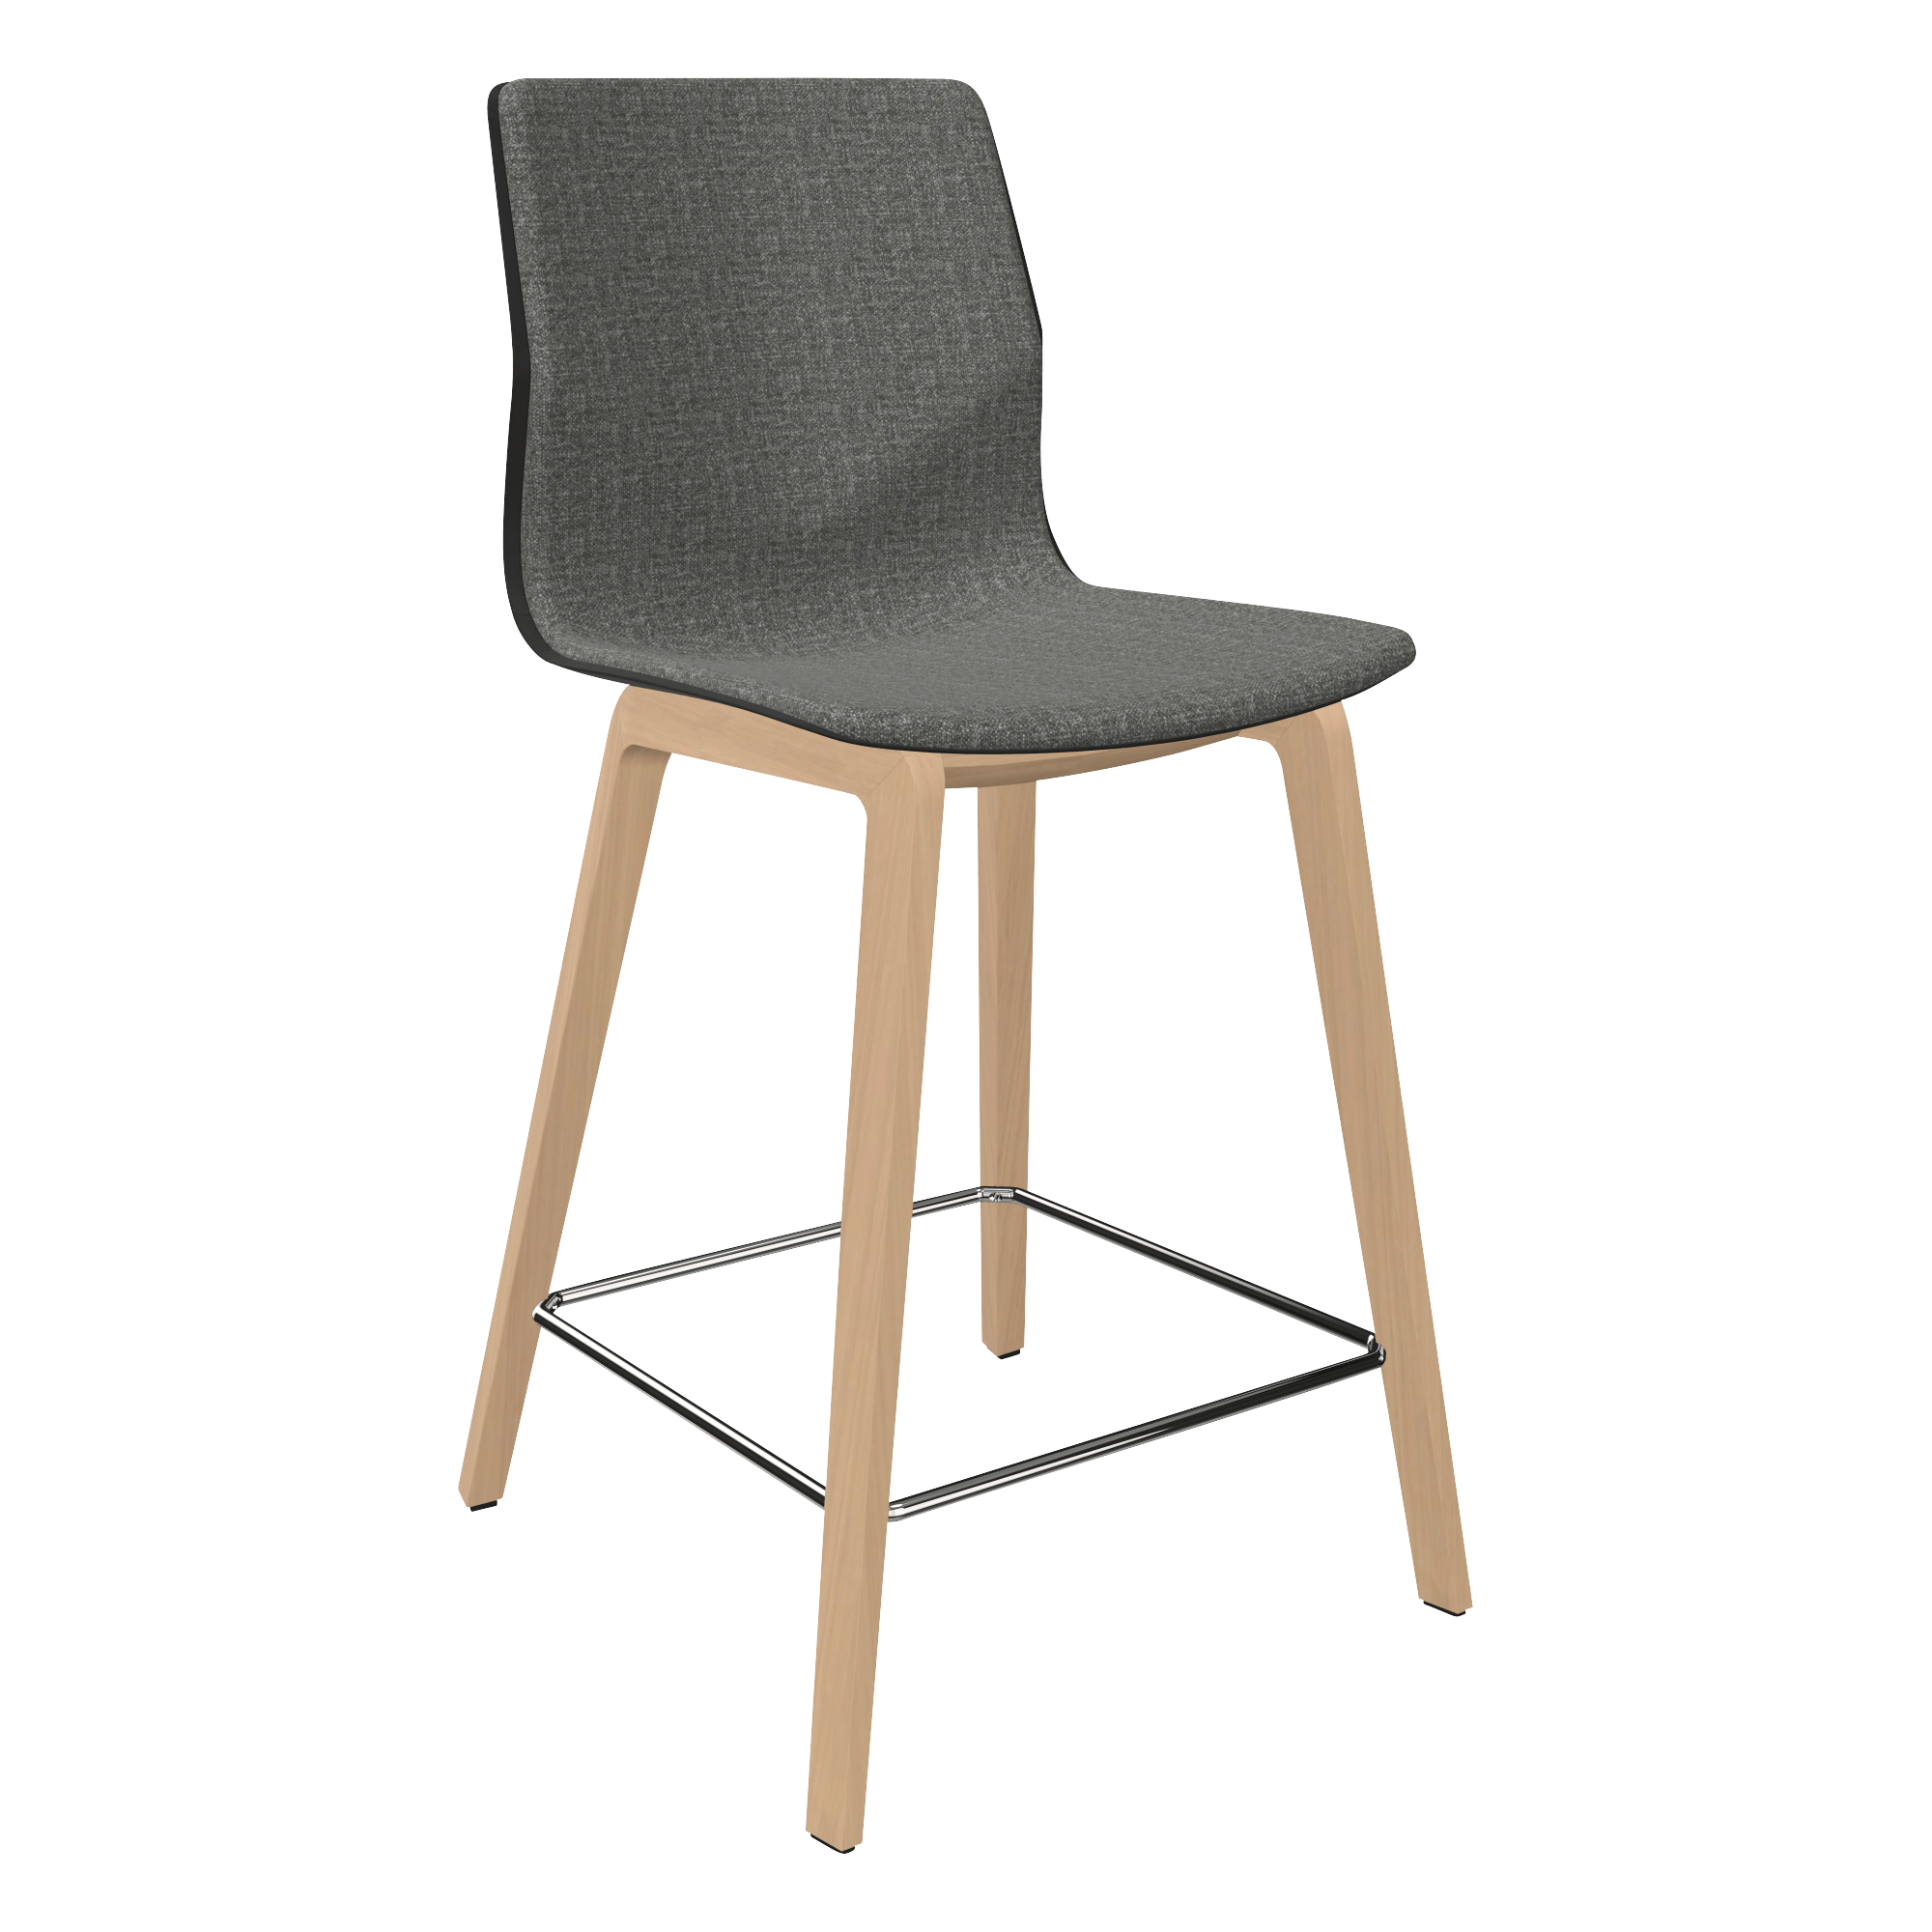 designer desk chair with wooden legs